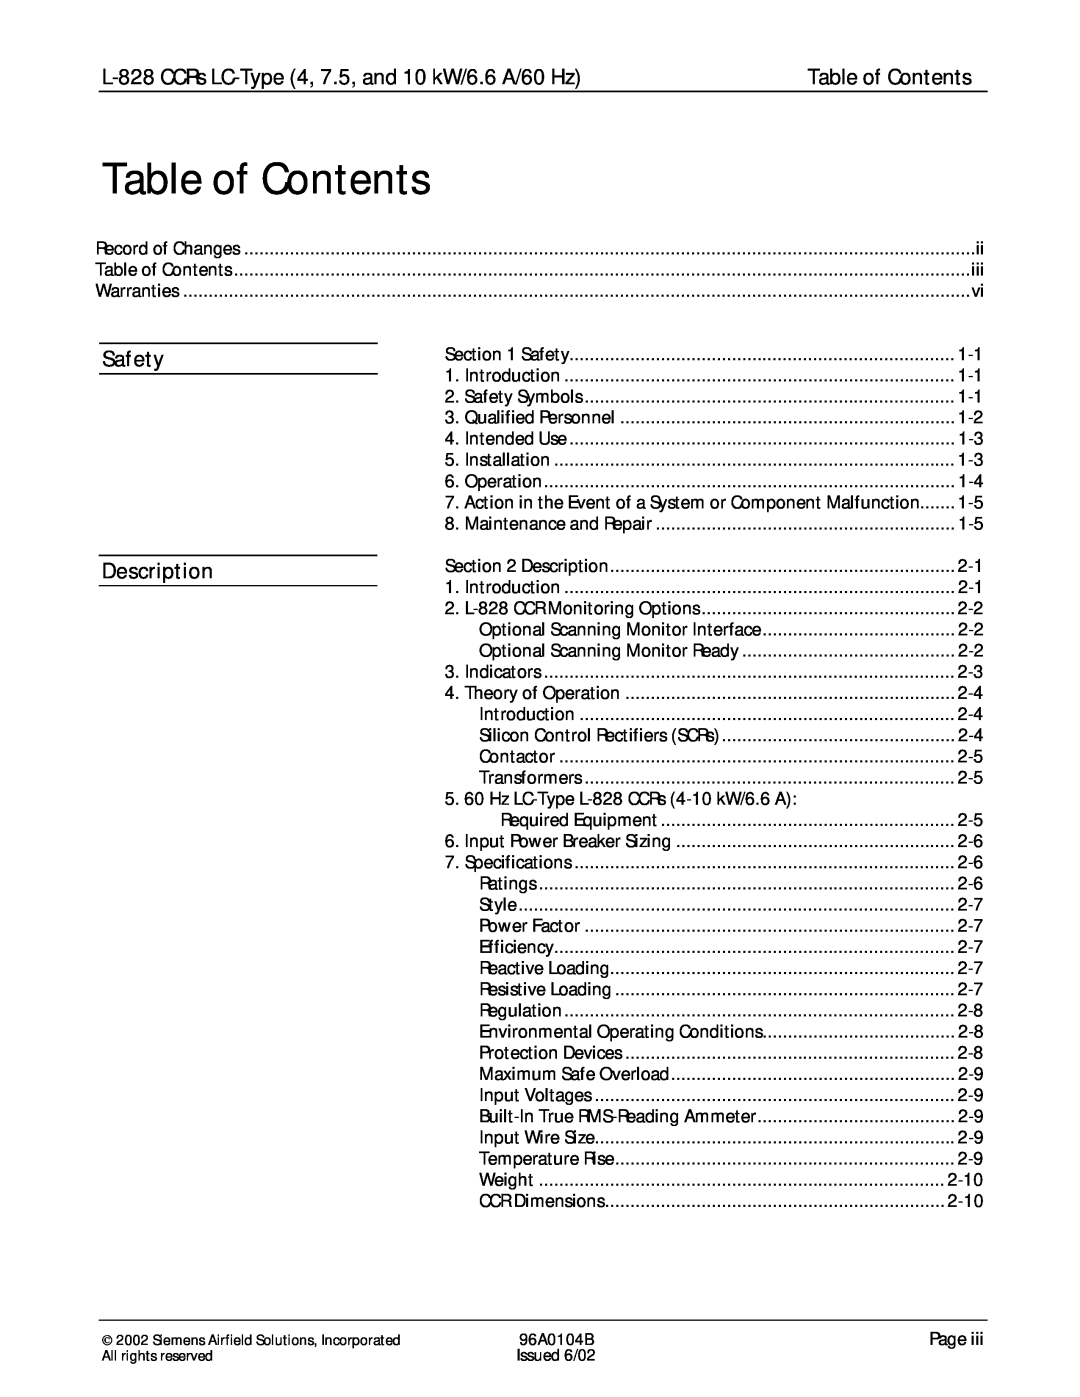 Siemens L-828 manual Table of Contents, Safety Description 